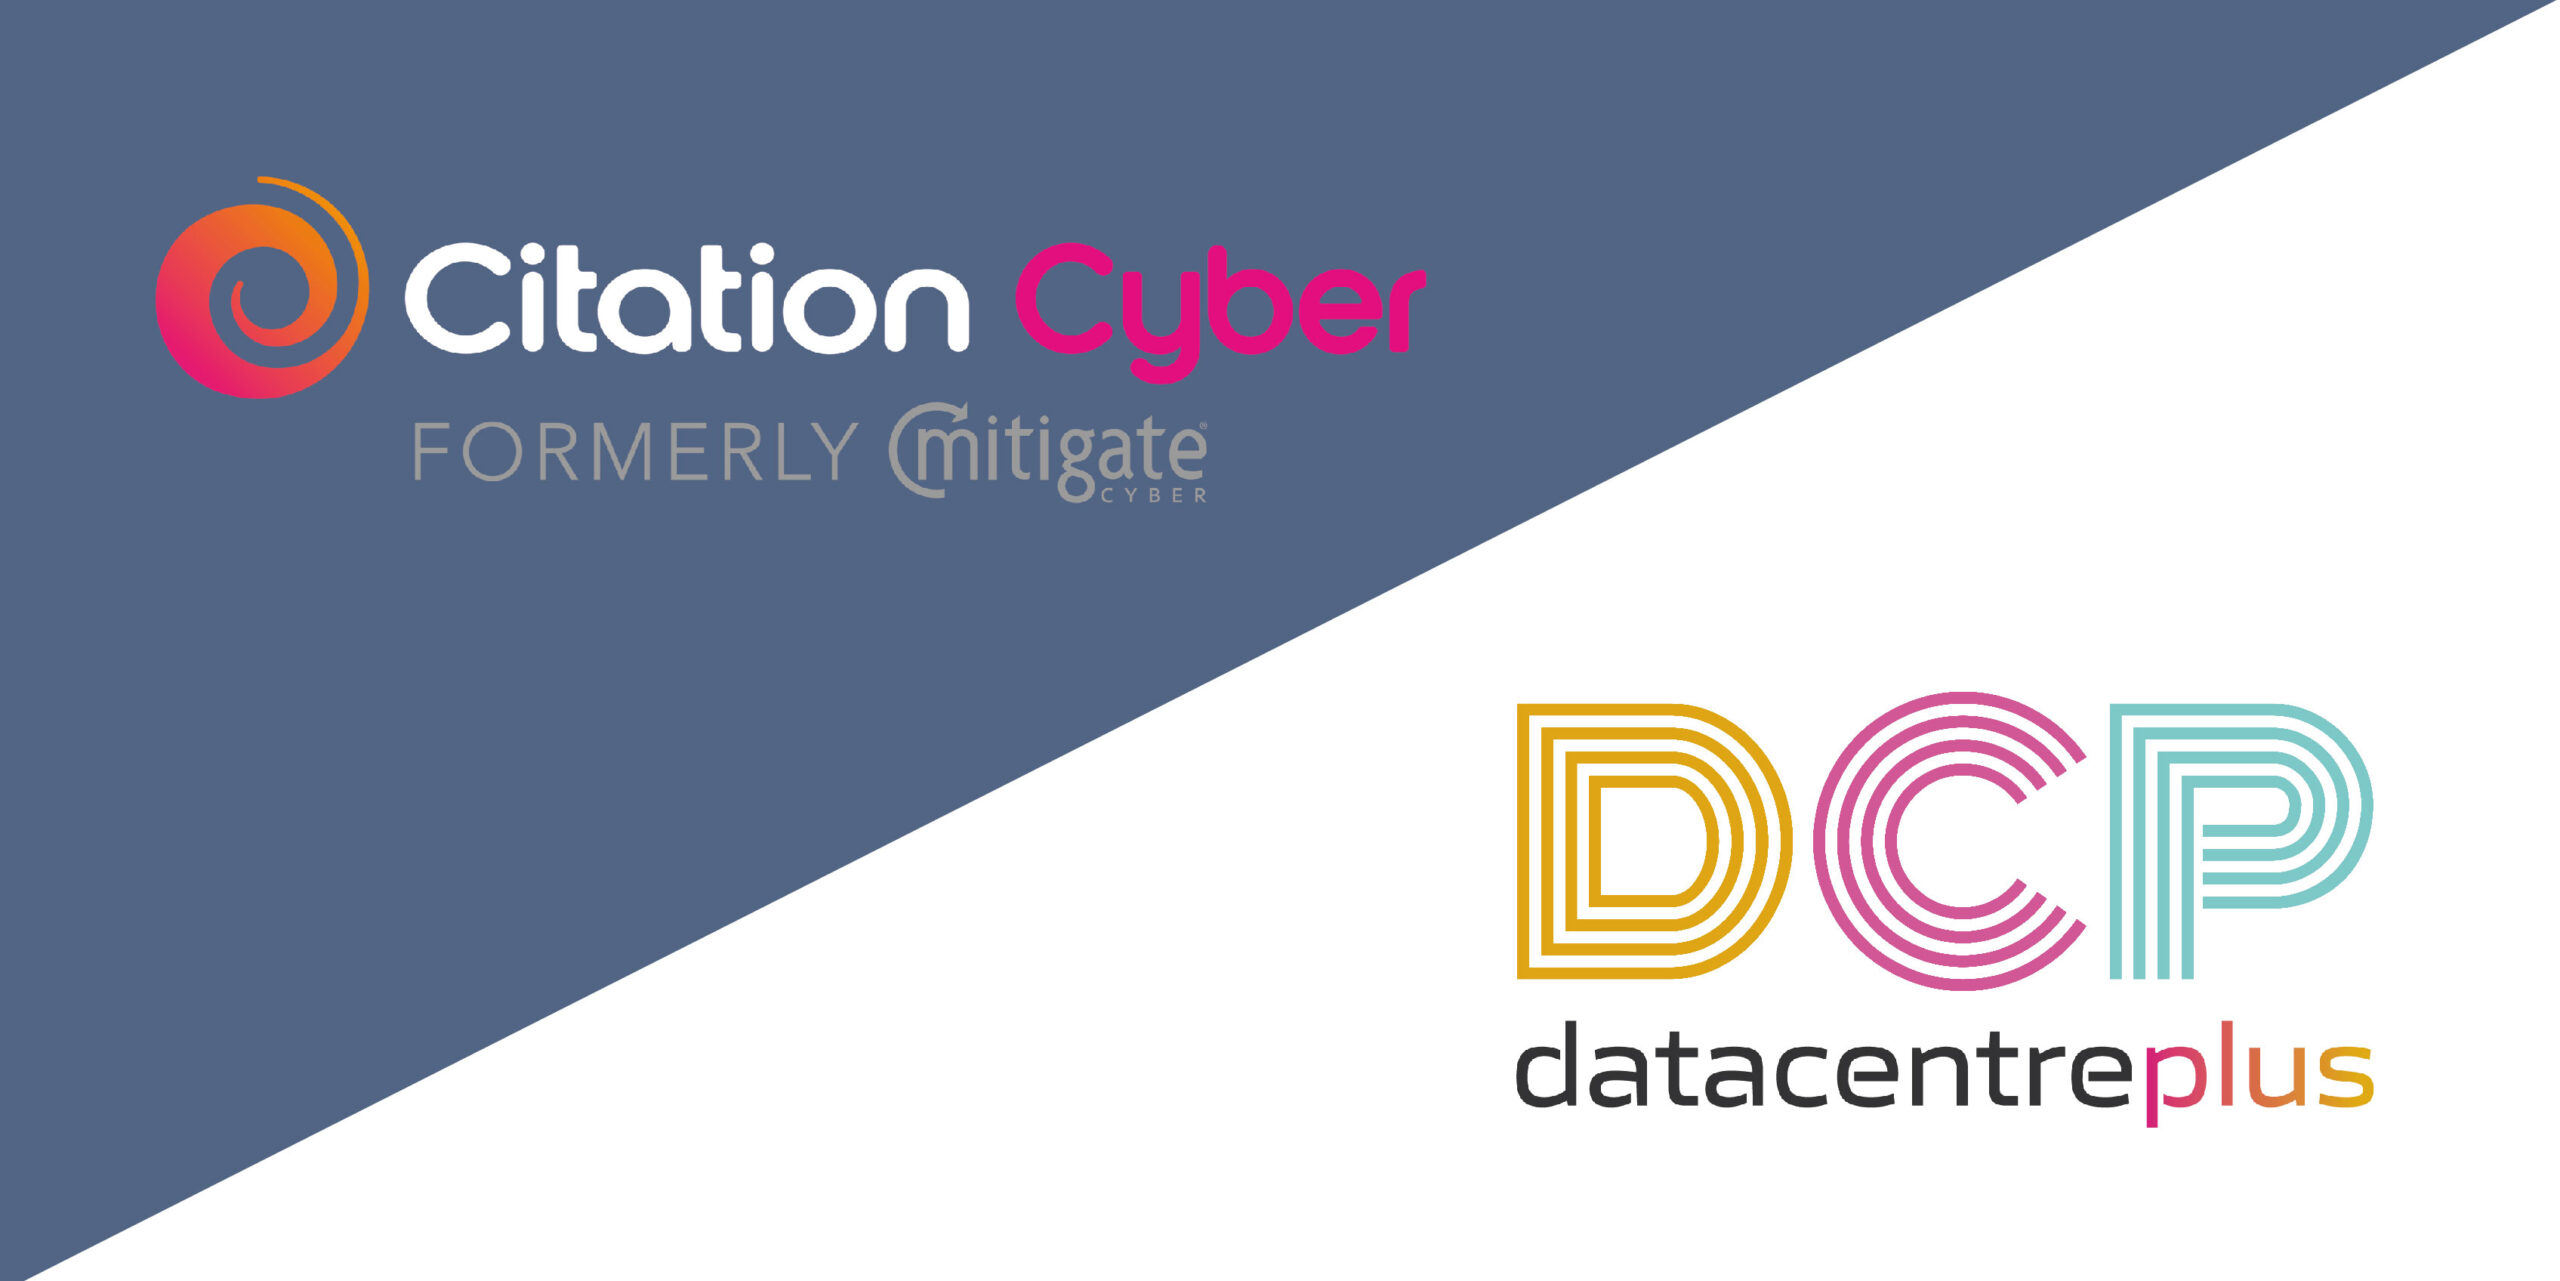 Citation Cyber partnership with Datacentreplus